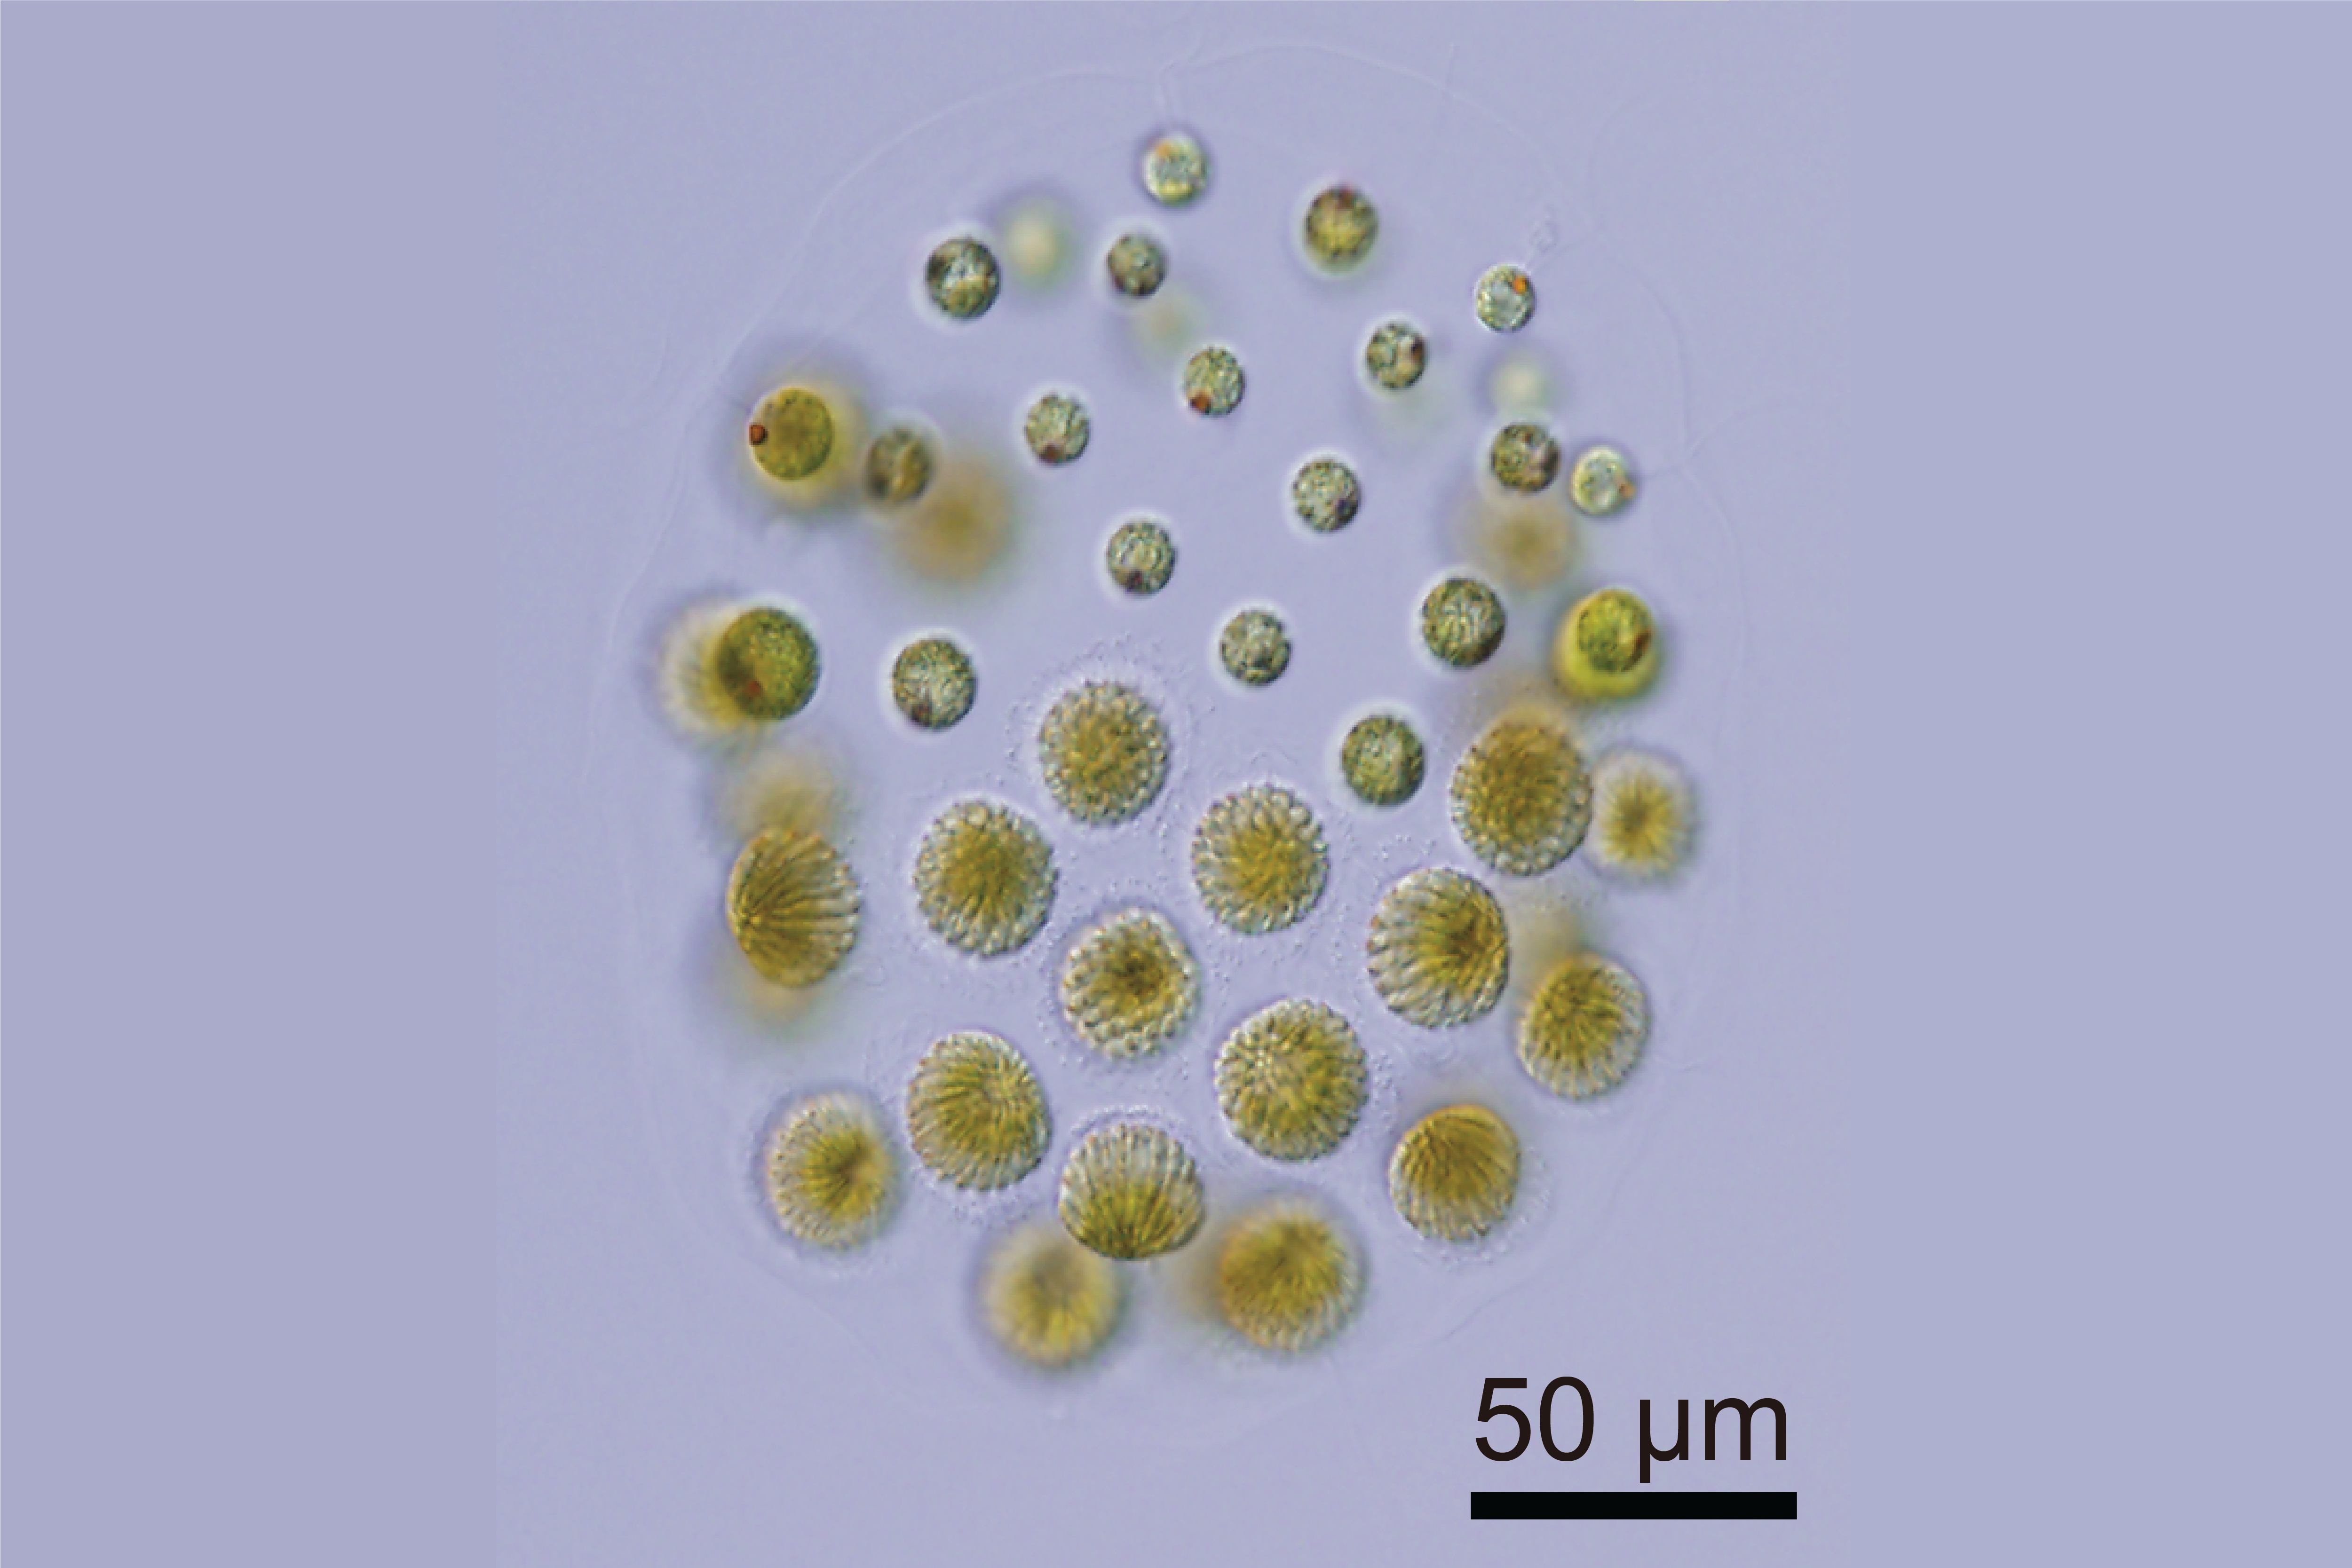 Light microscope image of green algae cells. 